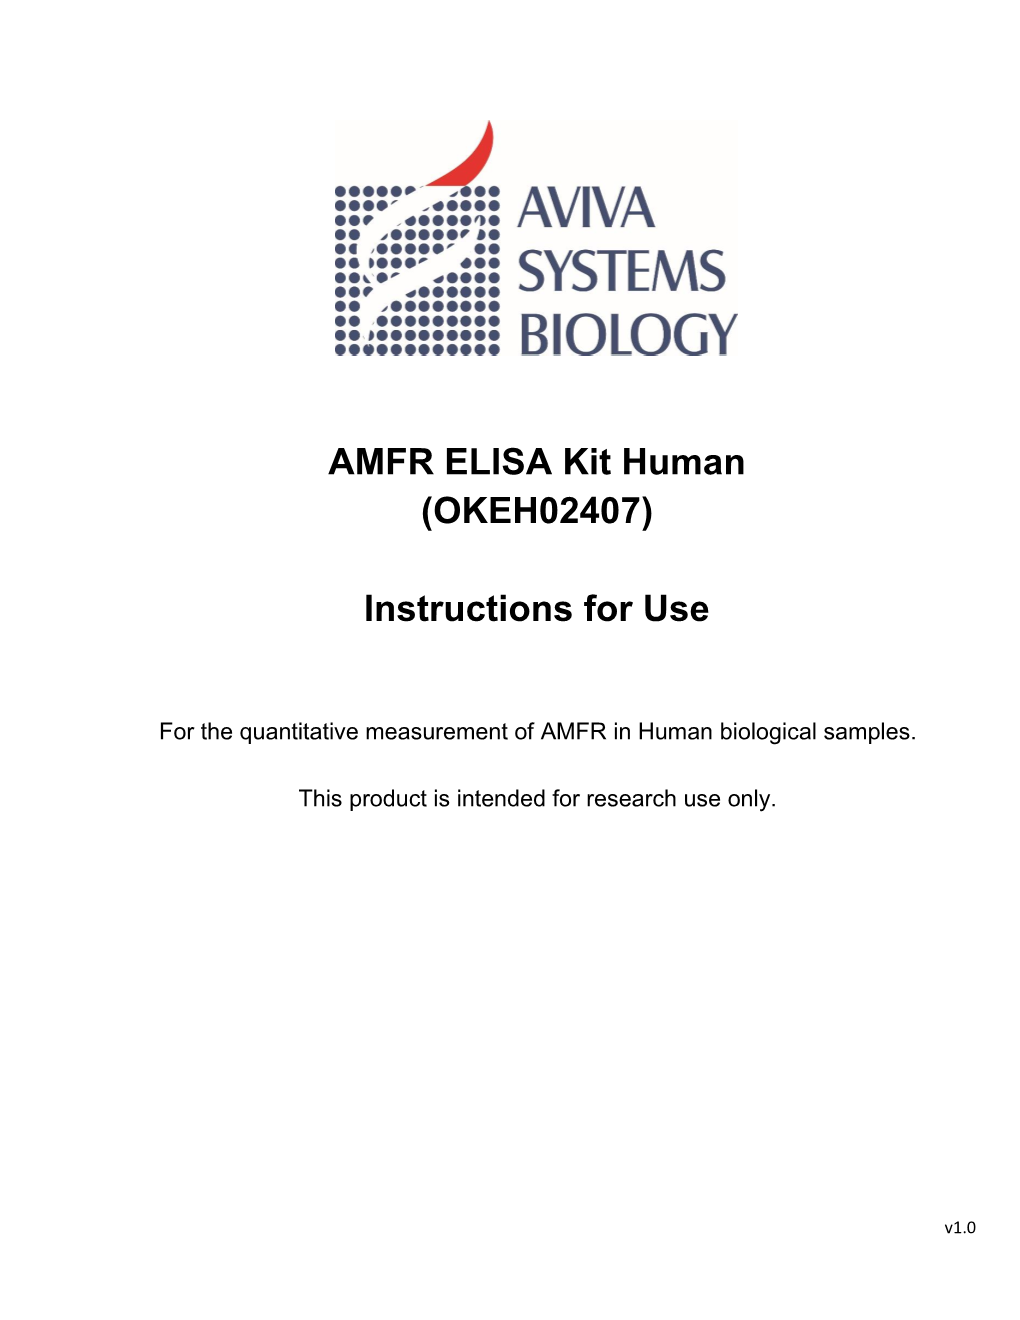 AMFR ELISA Kit Human (OKEH02407)